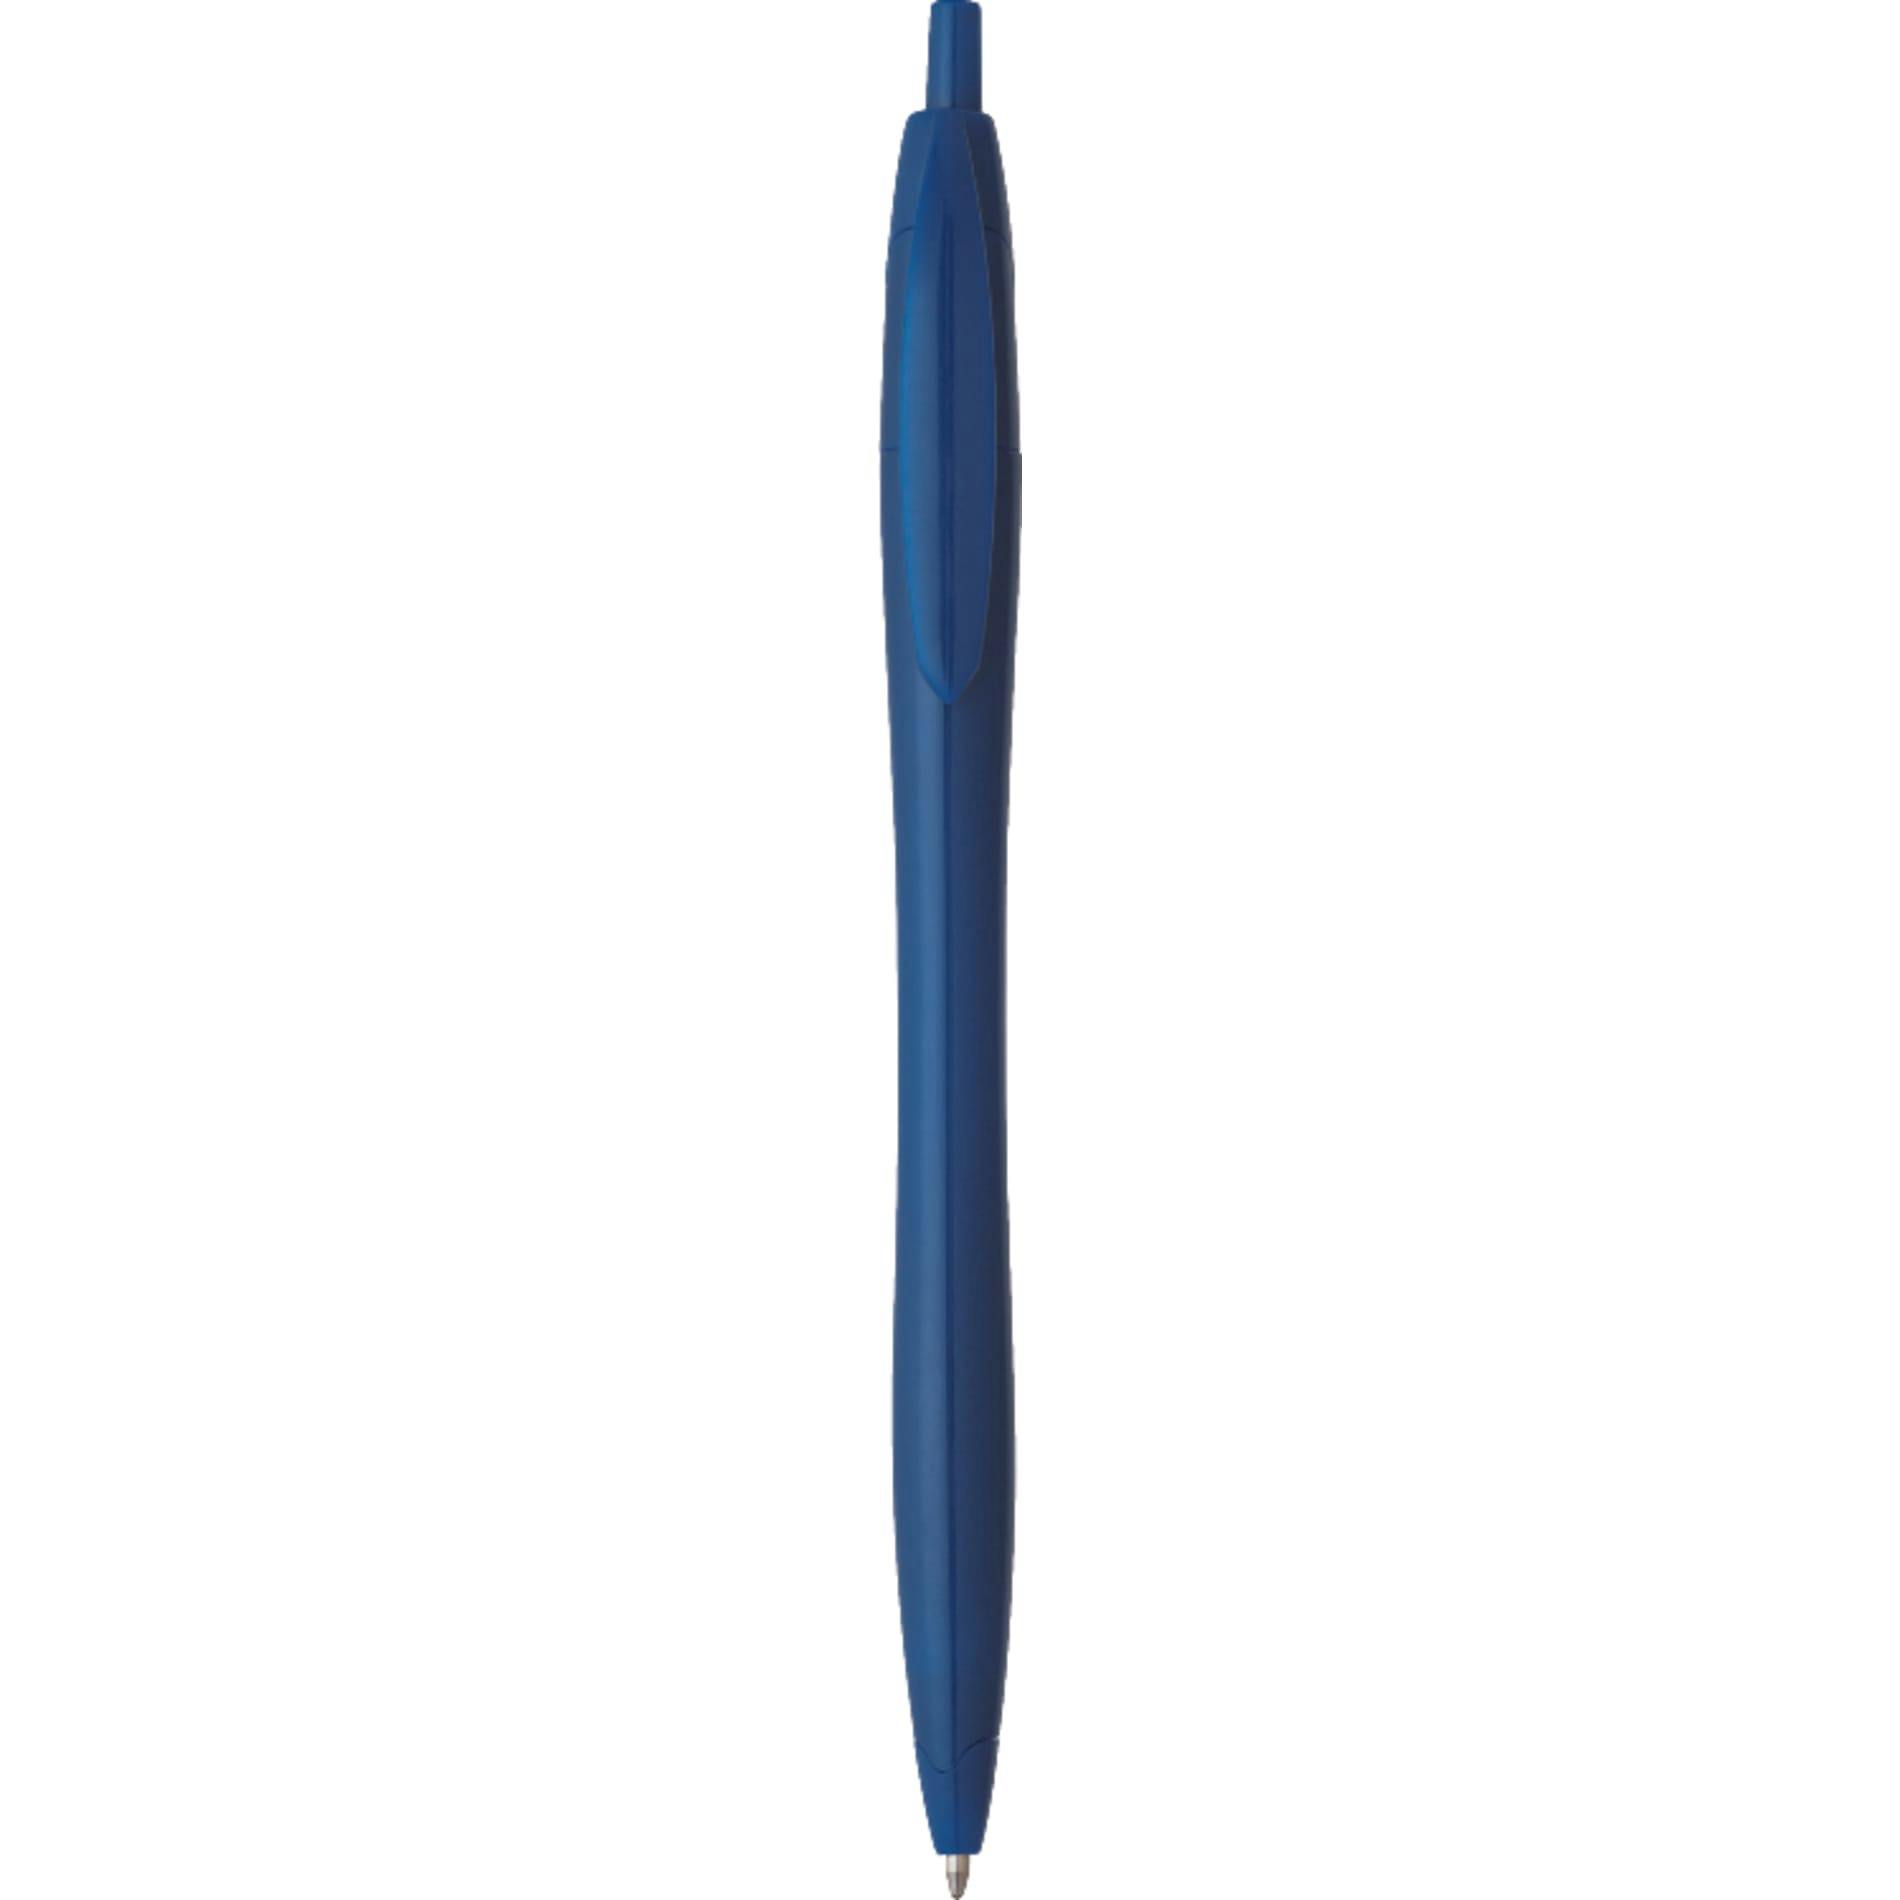 Cougar Ballpoint Pen - additional Image 2